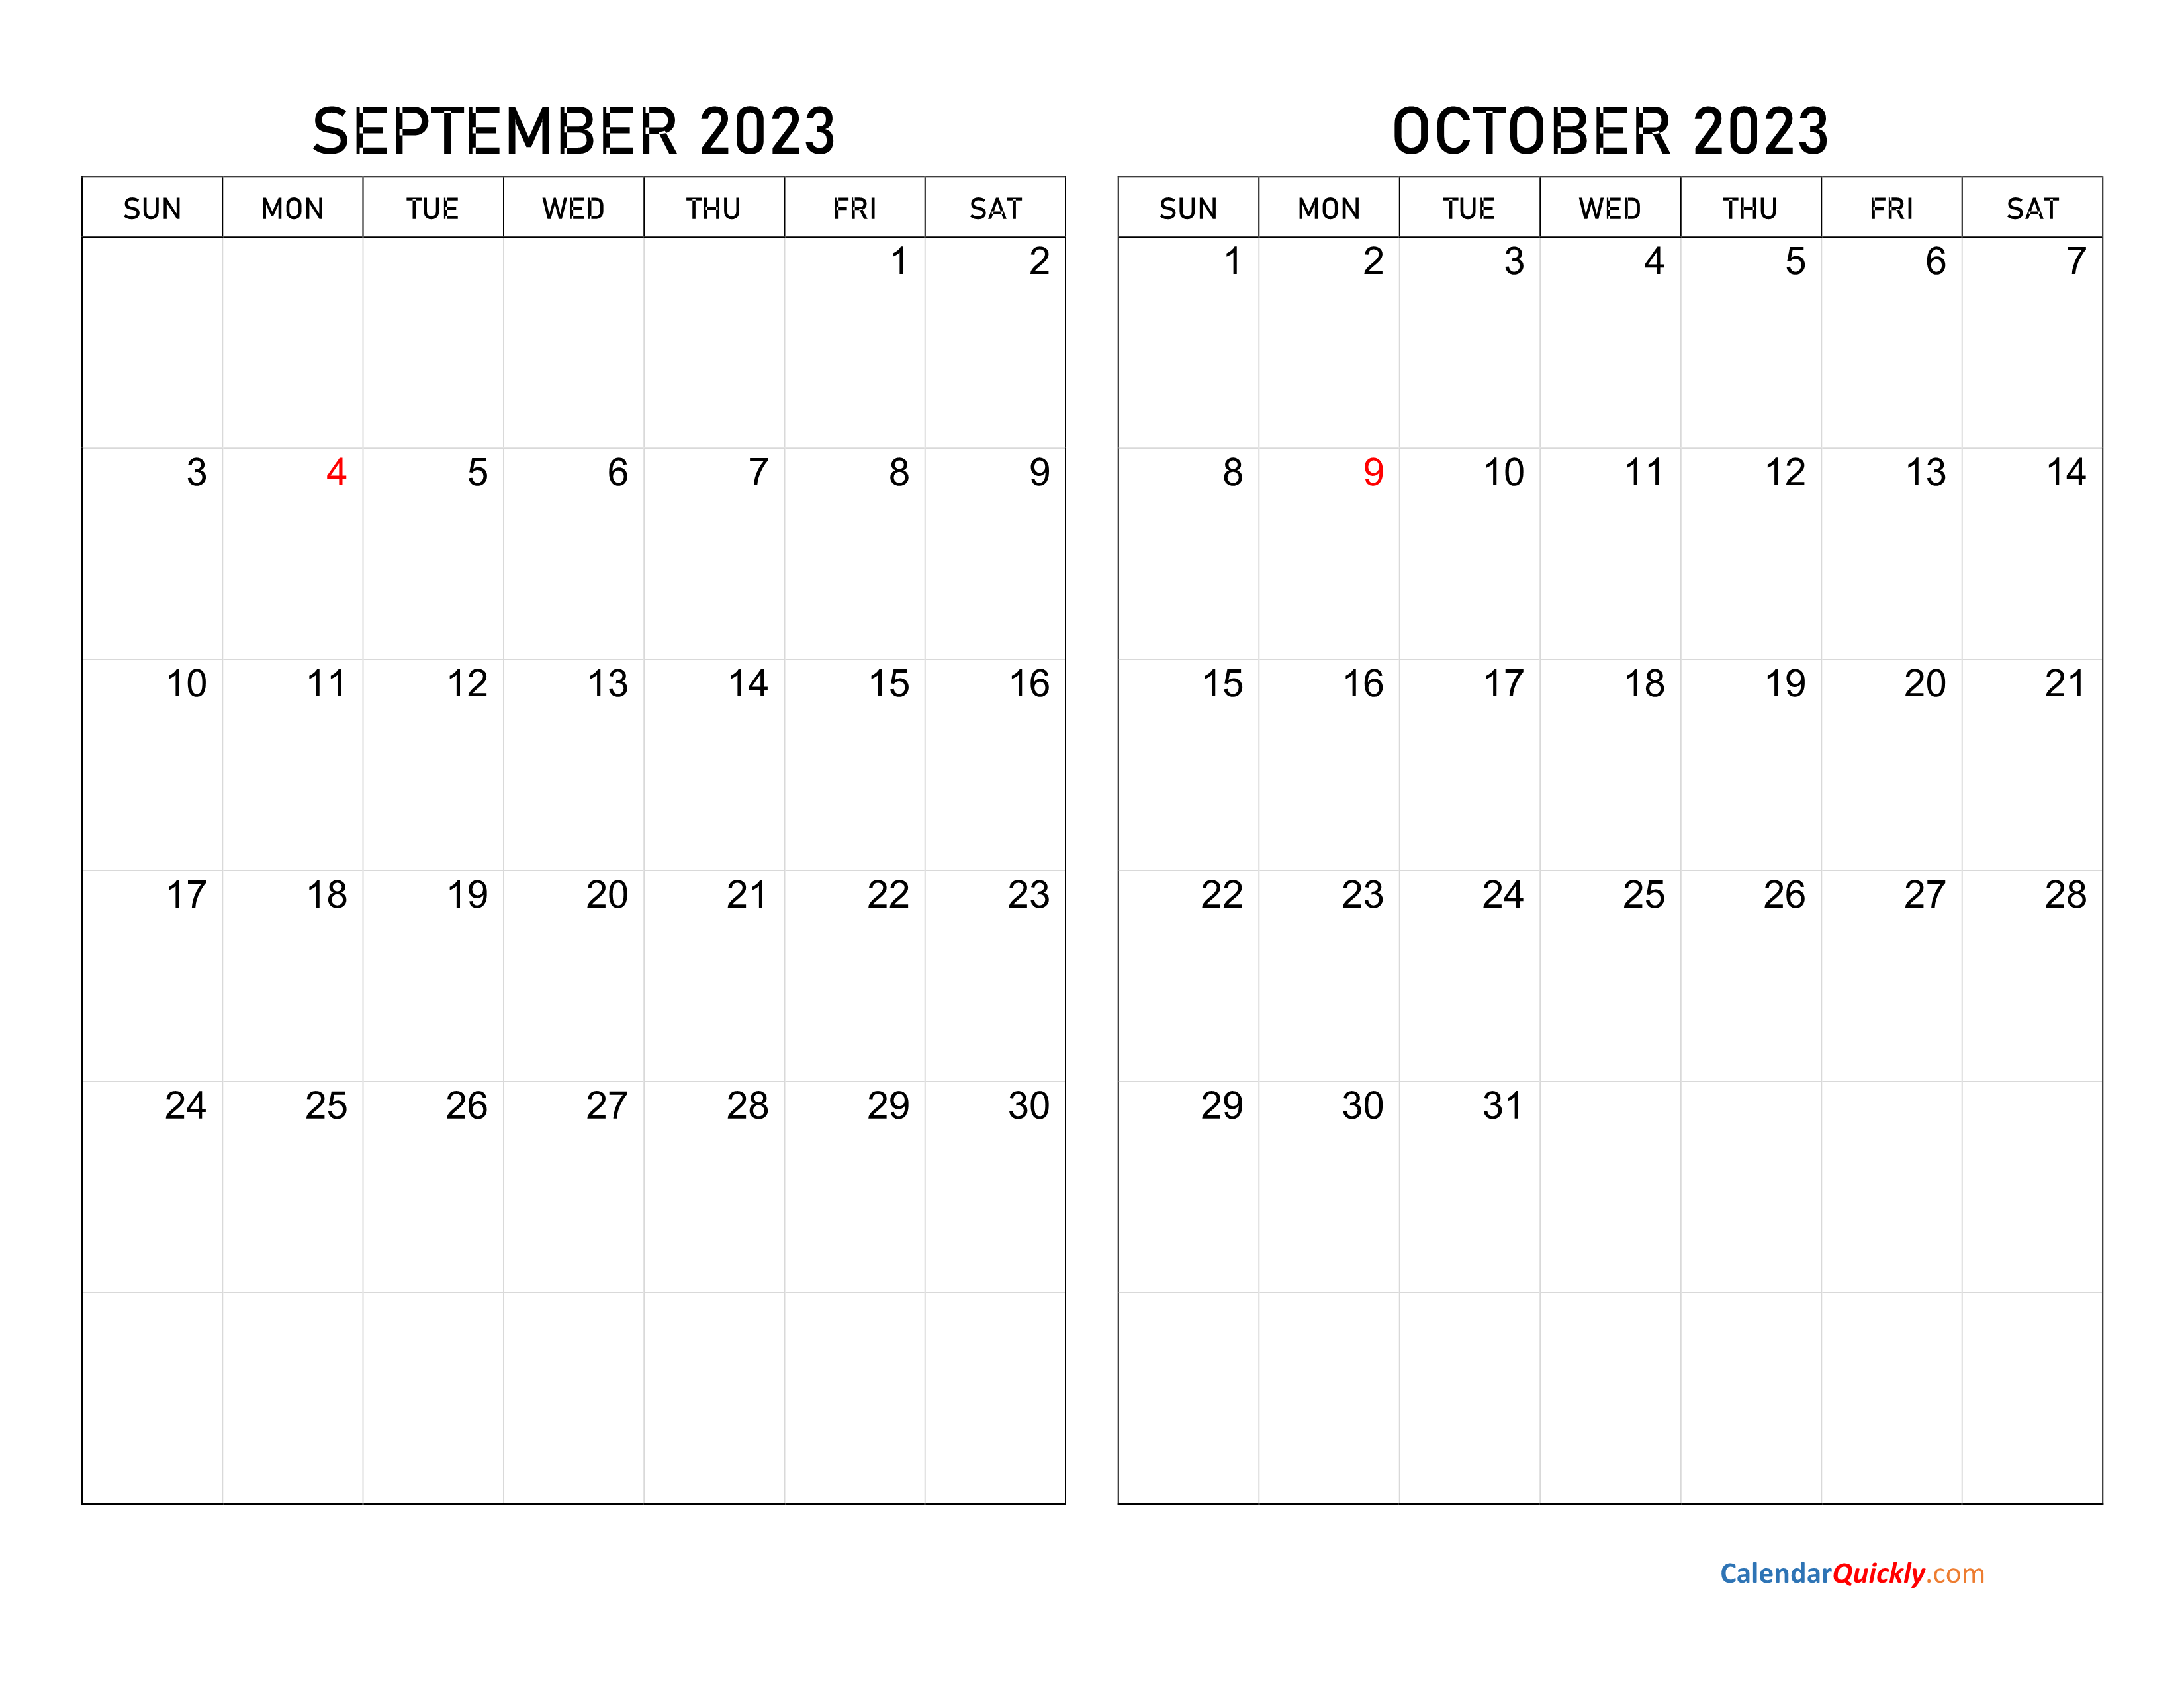 September and October 2023 Calendar Calendar Quickly